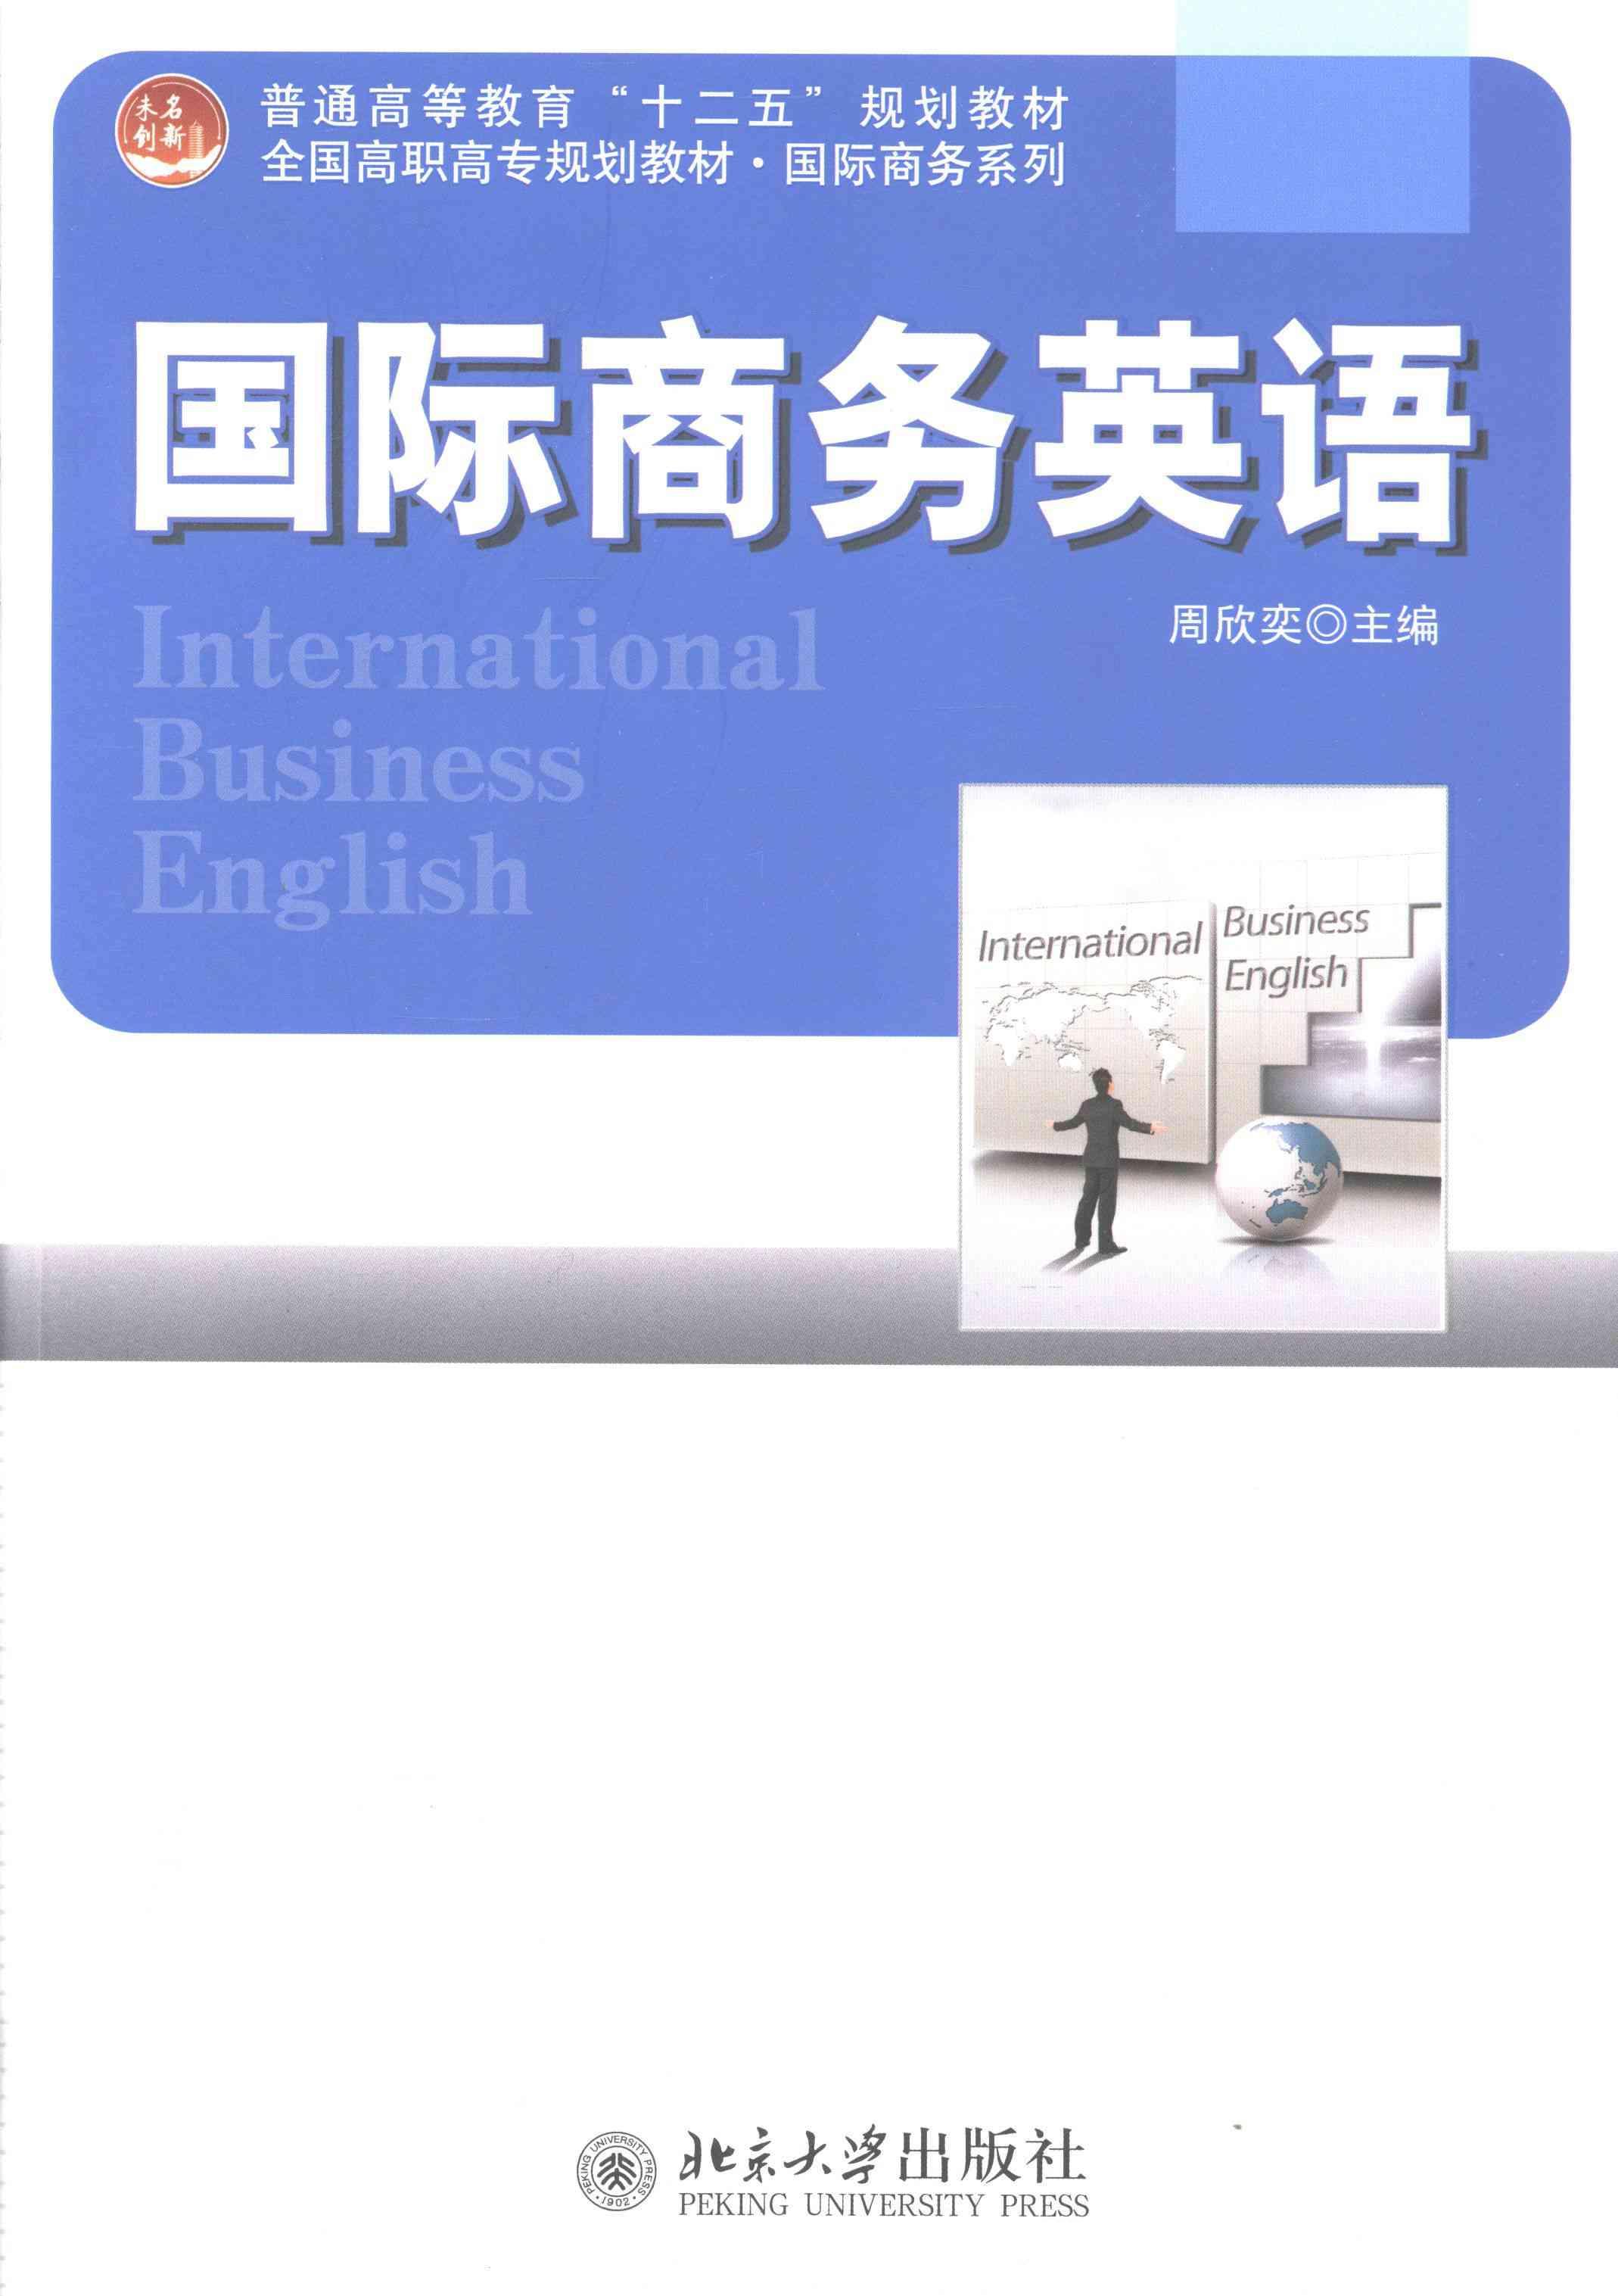 RT69包邮 商务英语北京大学出版社经济图书书籍